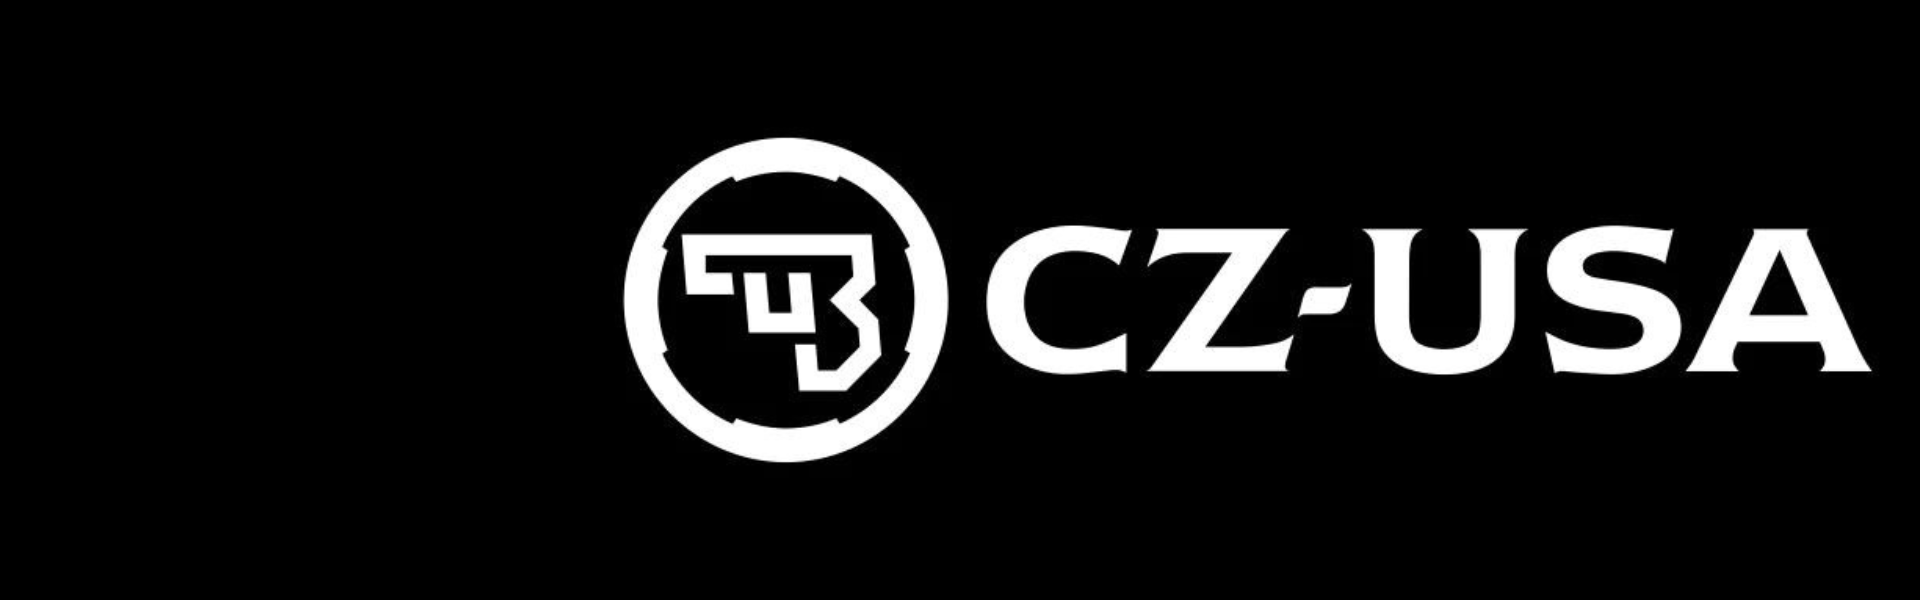 CZ-USA Lifestyle Image - Gun Image